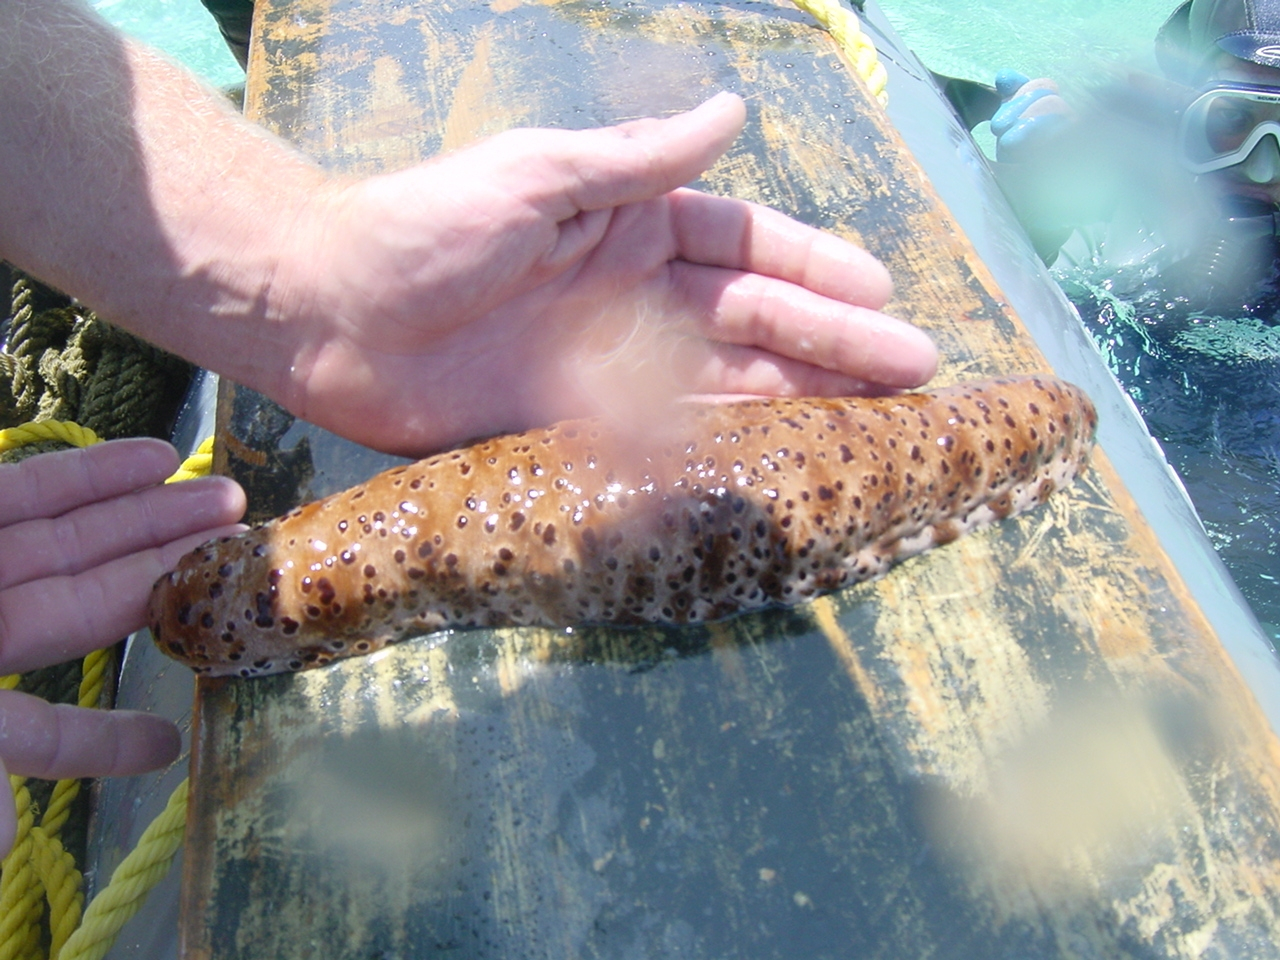 A holothurian - black-spotted sea cucumber (Holothuria sp